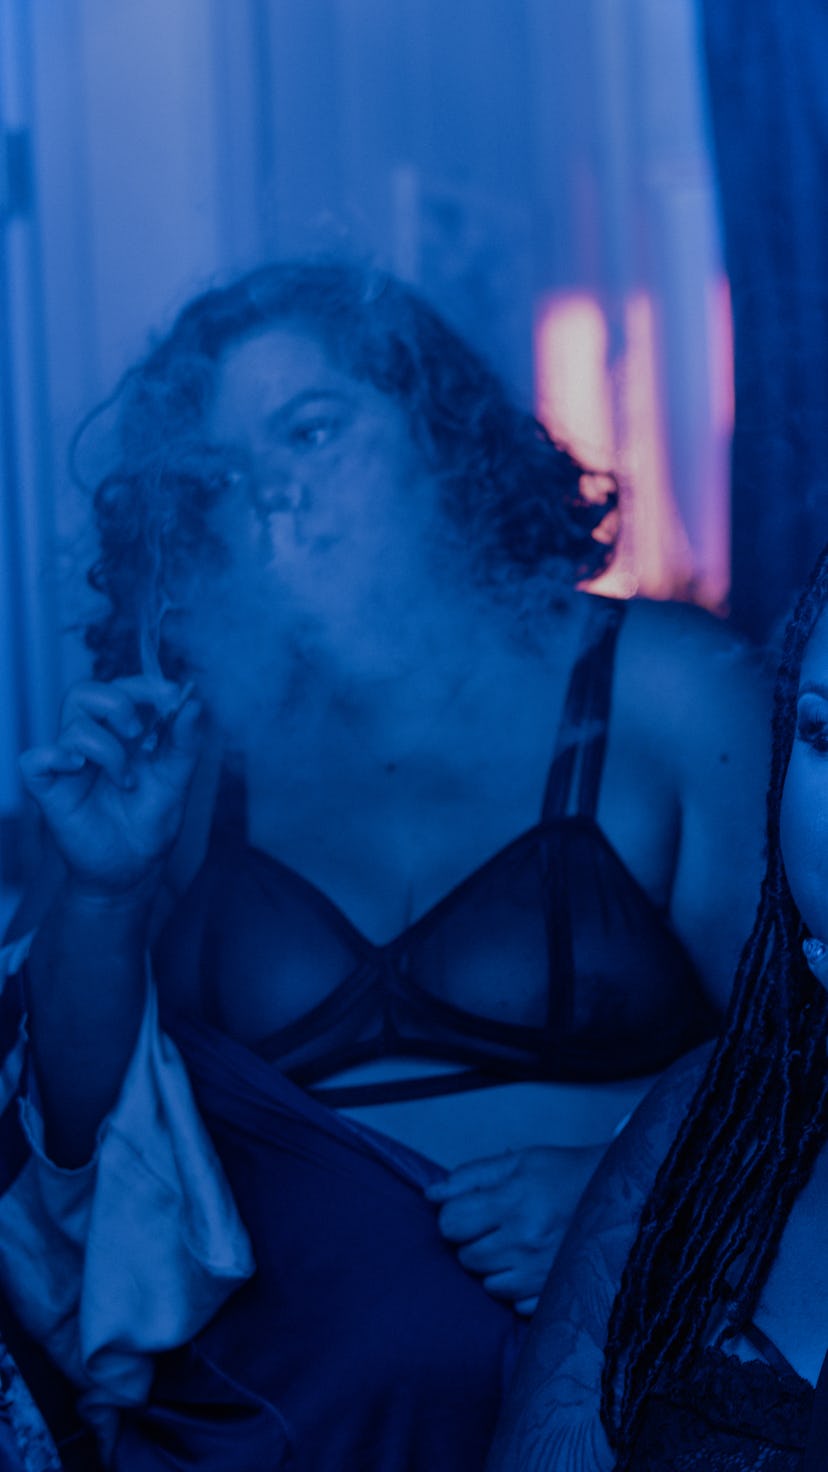 A group of girls smoking marihuana, wearing lingerie.